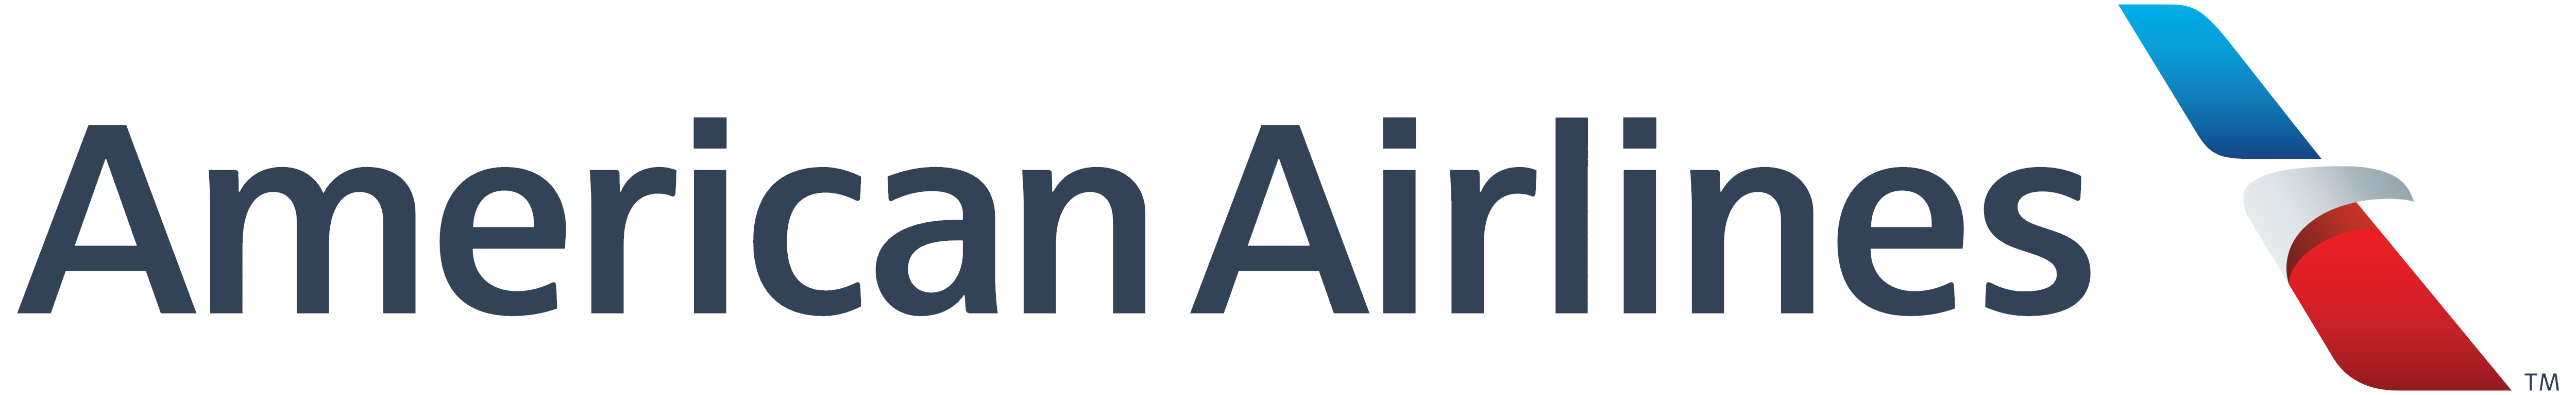 Logotipo da companhia aérea americana branco